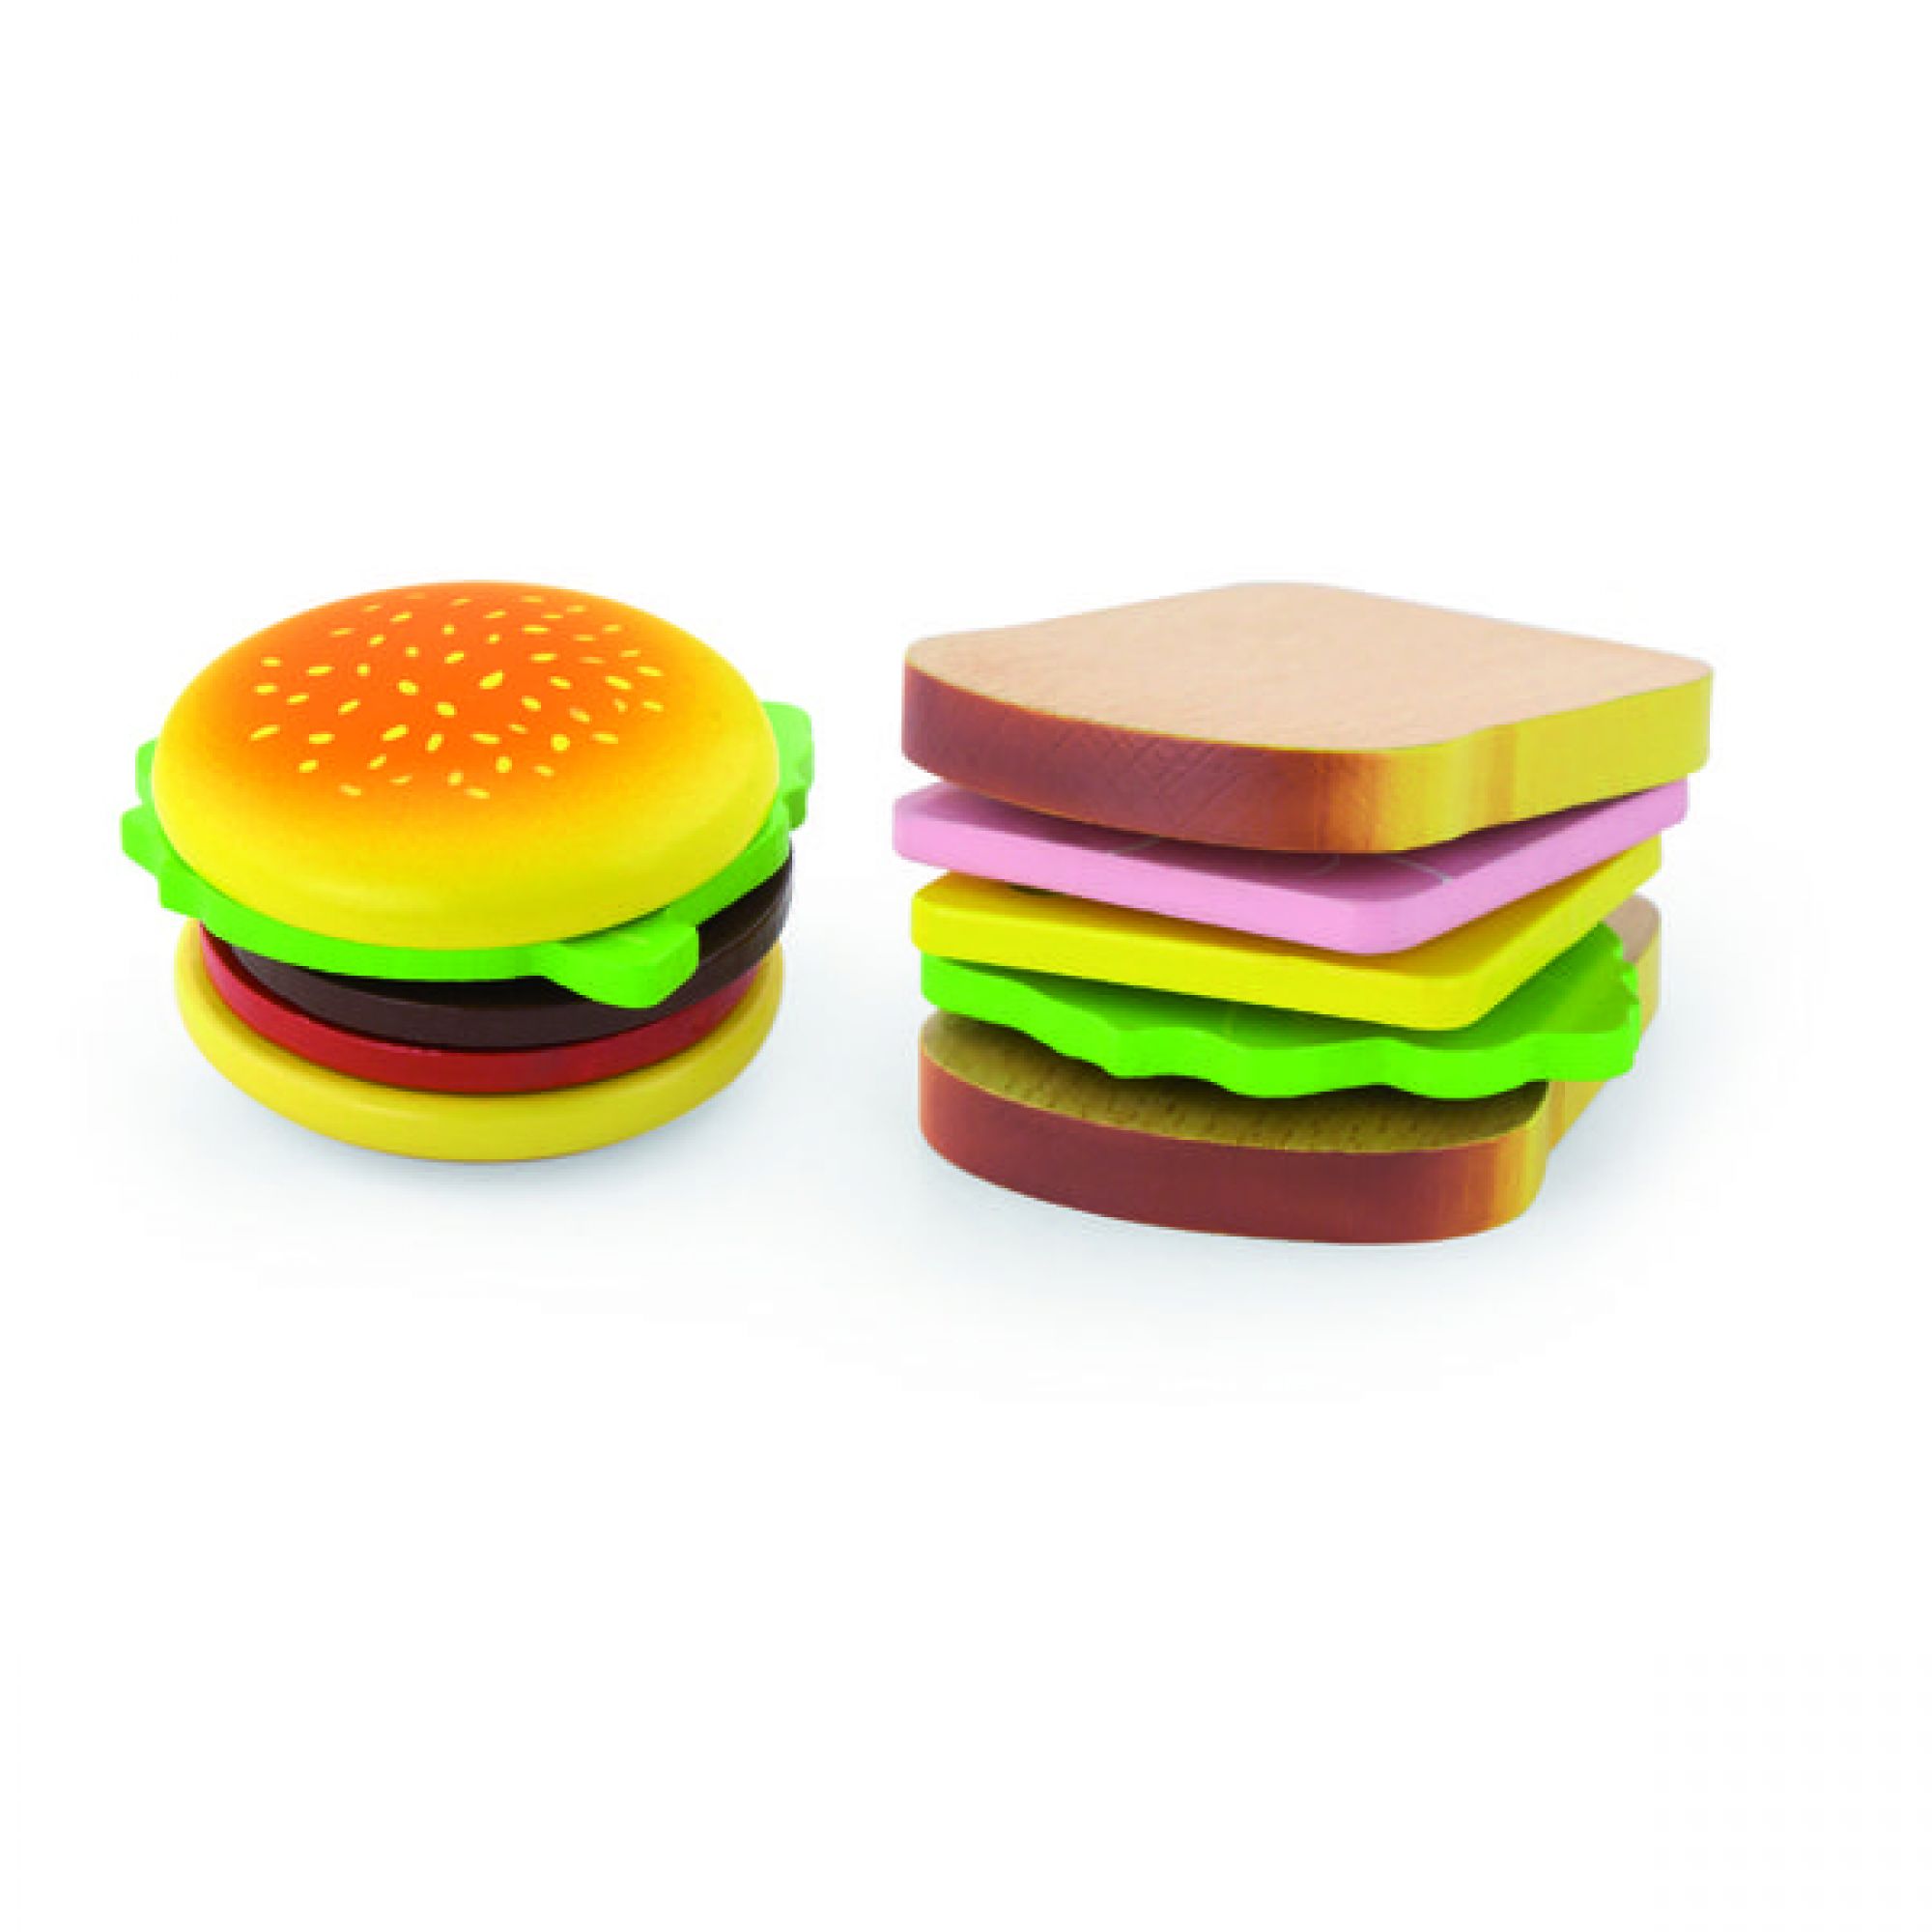 Сэндвичи играть. Игрушка бутерброд. Игрушечный сэндвич. Пирамидка "бургер". Набор с пластилином гамбургер.